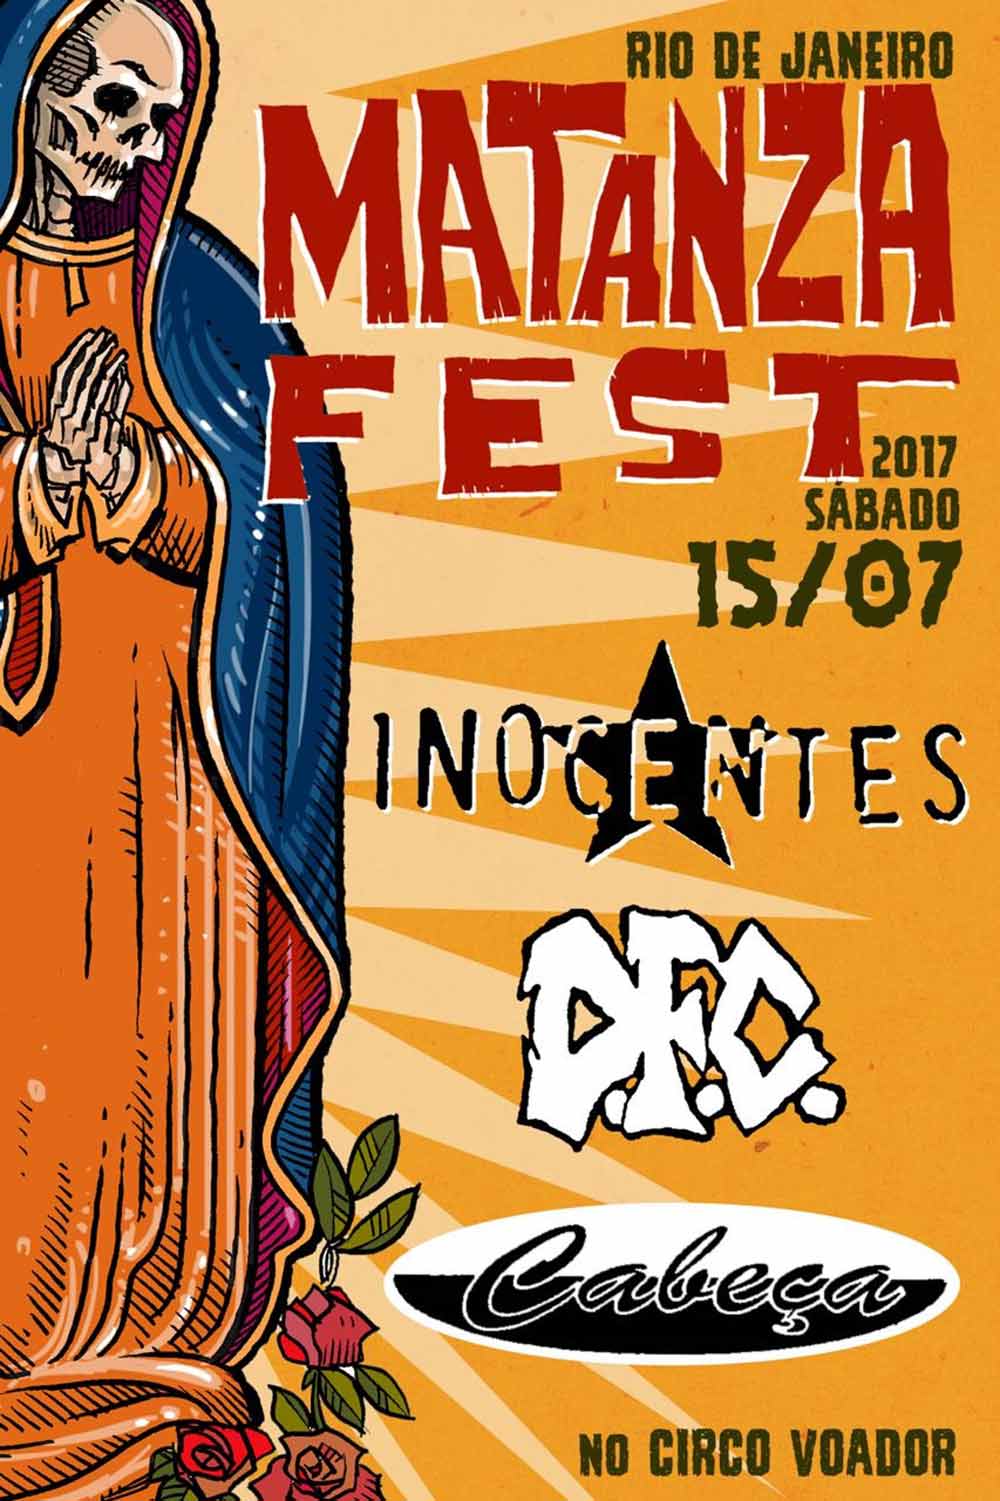 'Matanza Fest' terá Inocentes, D.F.C., Cabeça e Matanza